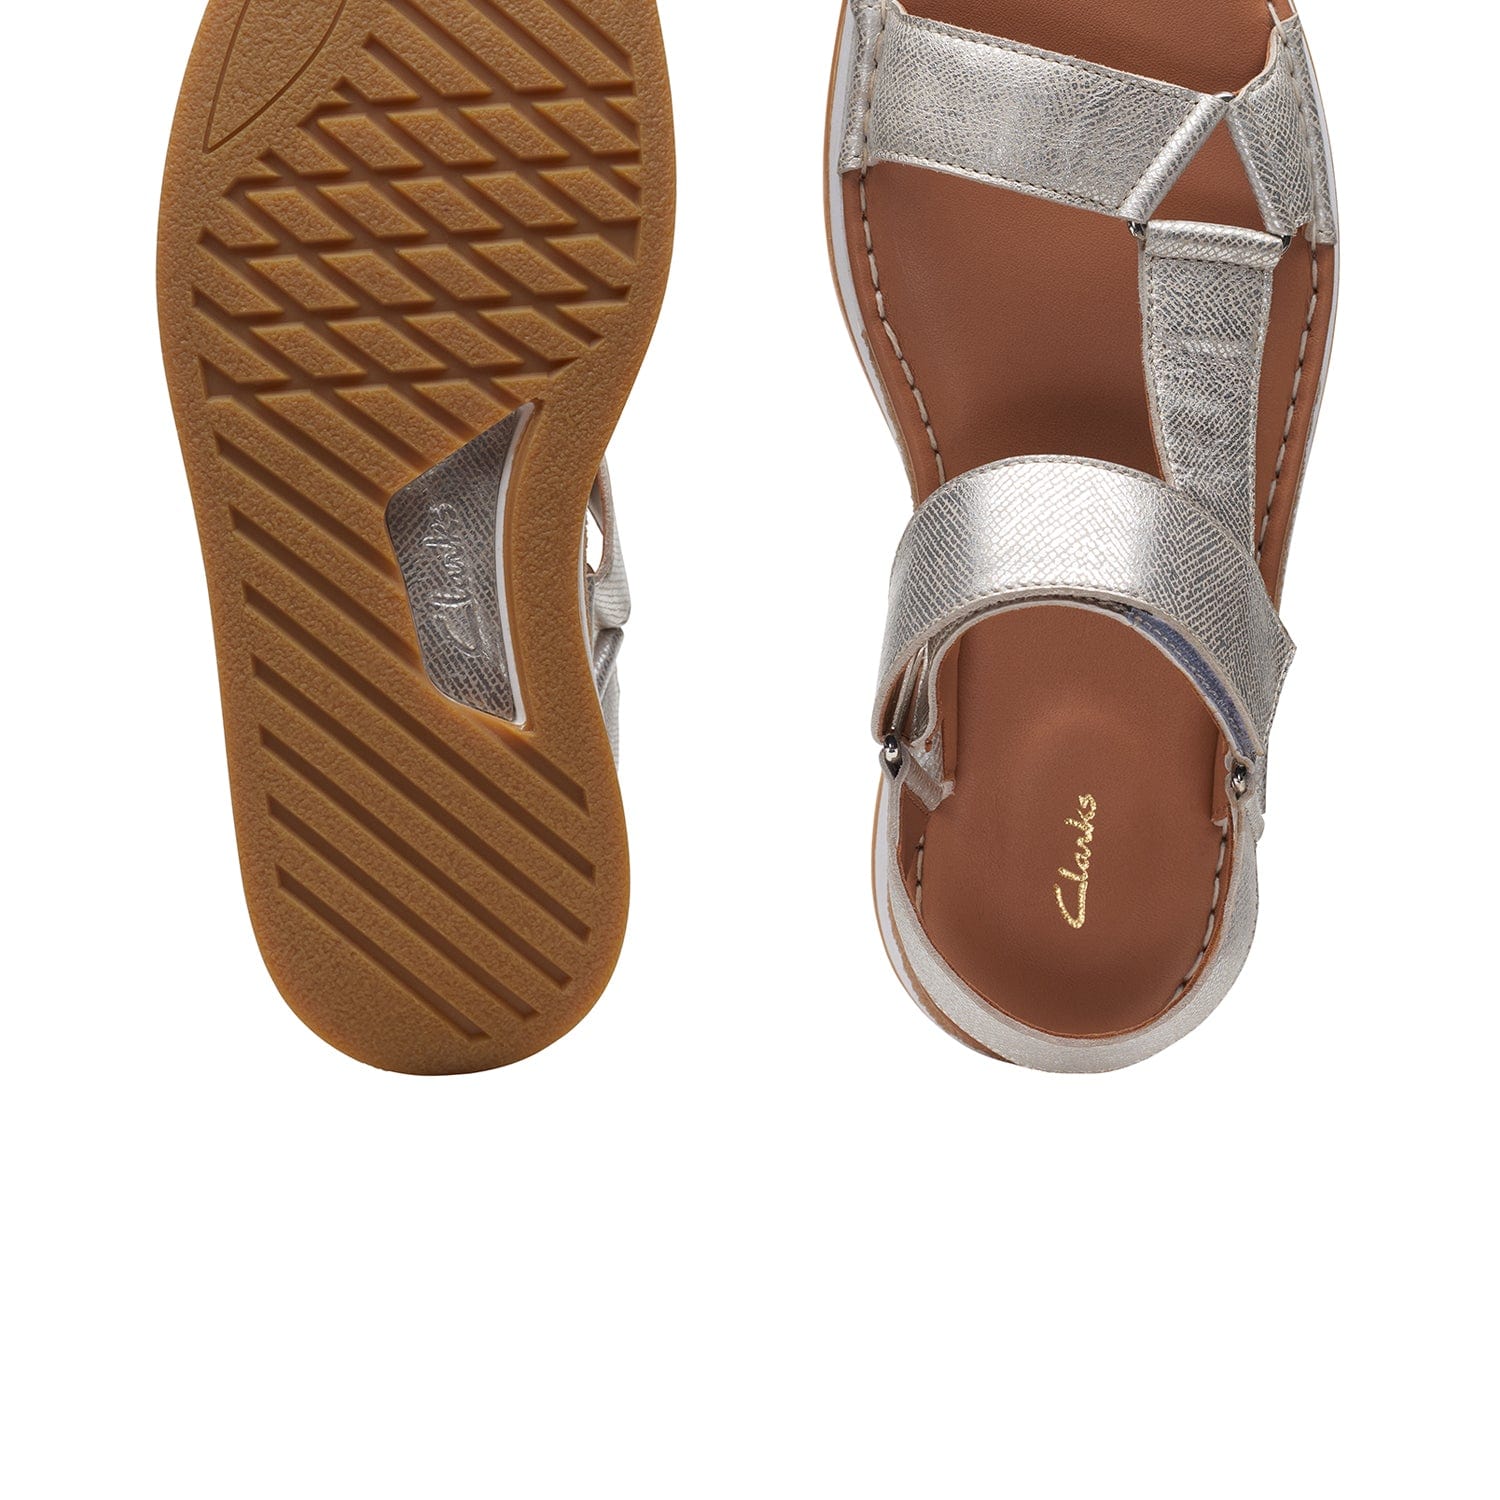 Clarks Craftsun Sport - Sandals - Silver Leather - 261704484 - D Width (Standard Fit)